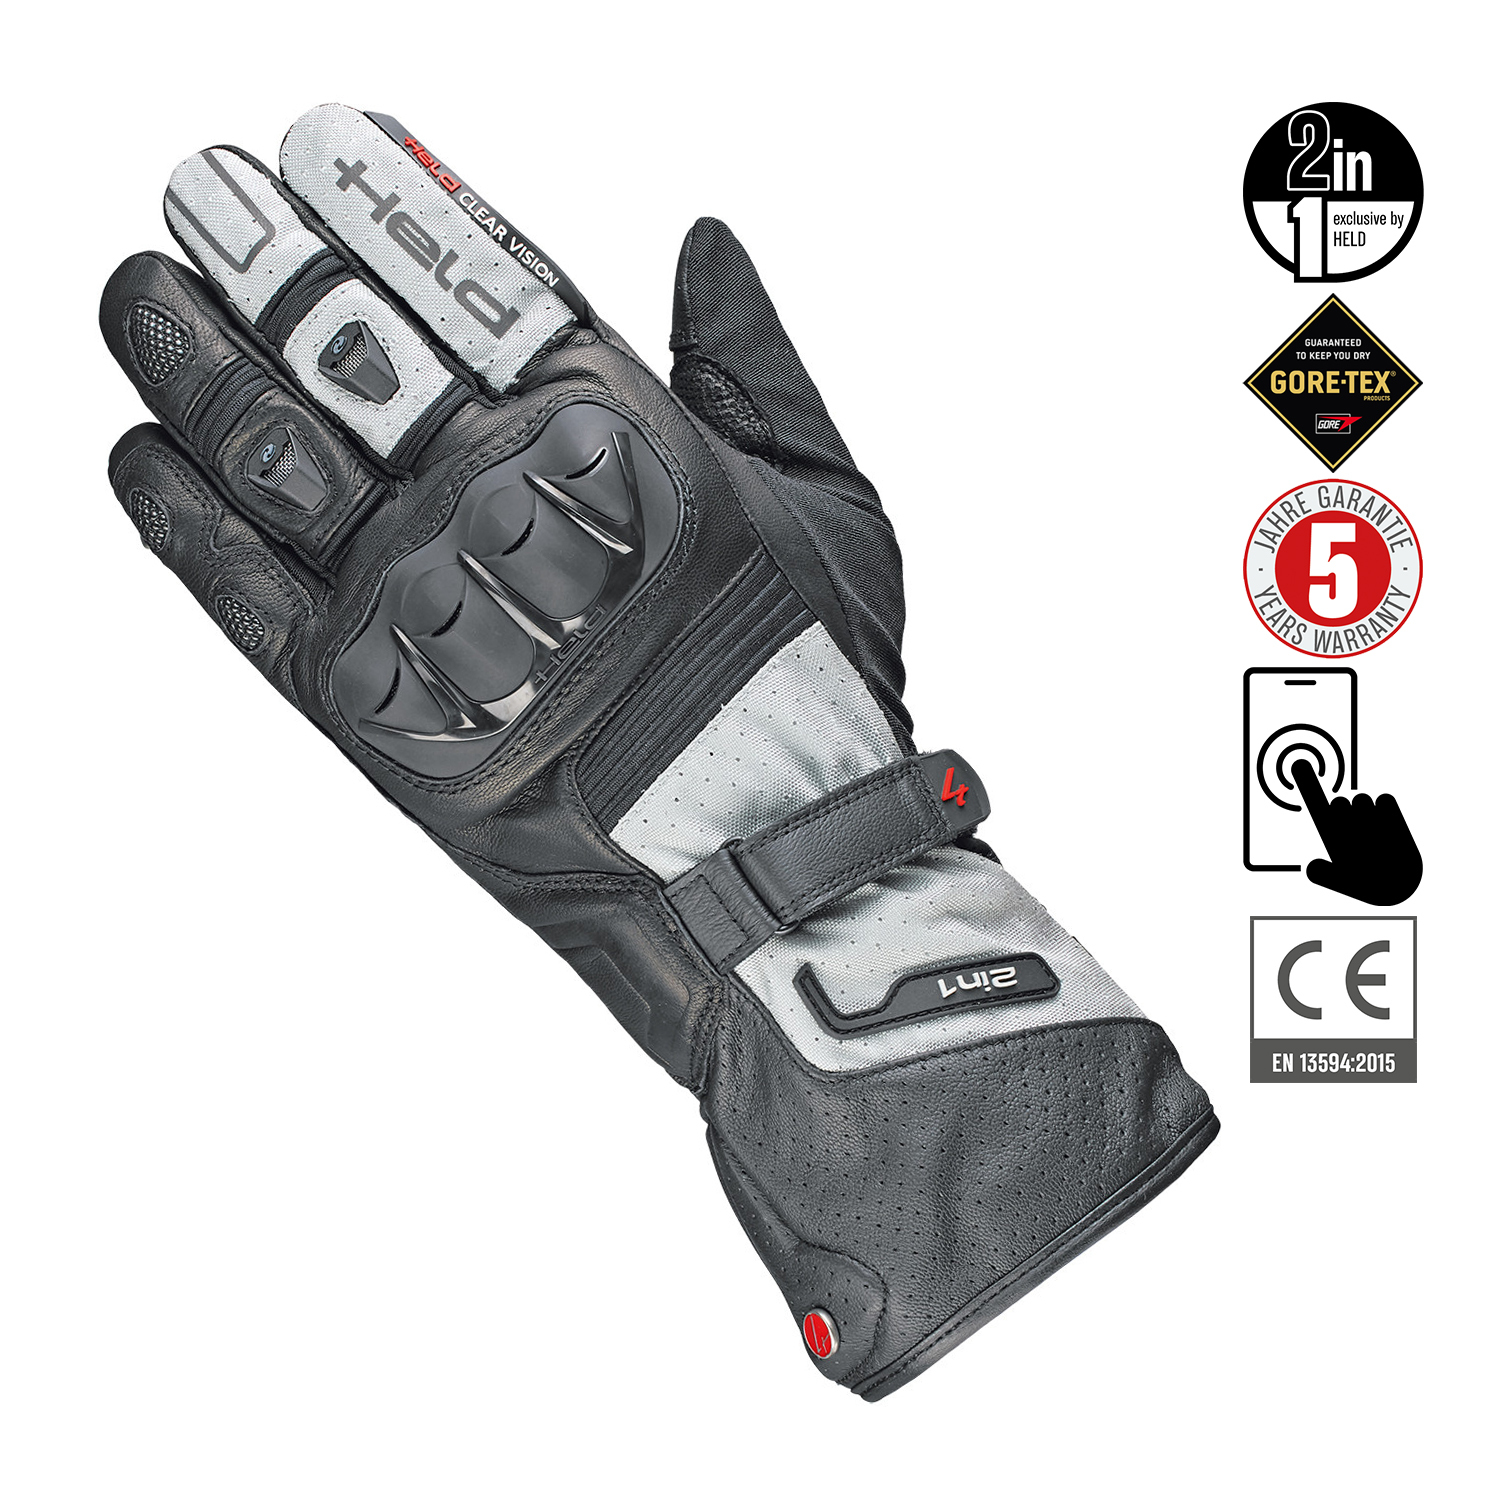 Held Air n Dry II Gore-Tex Gloves Black-Grey - Available in Various Sizes